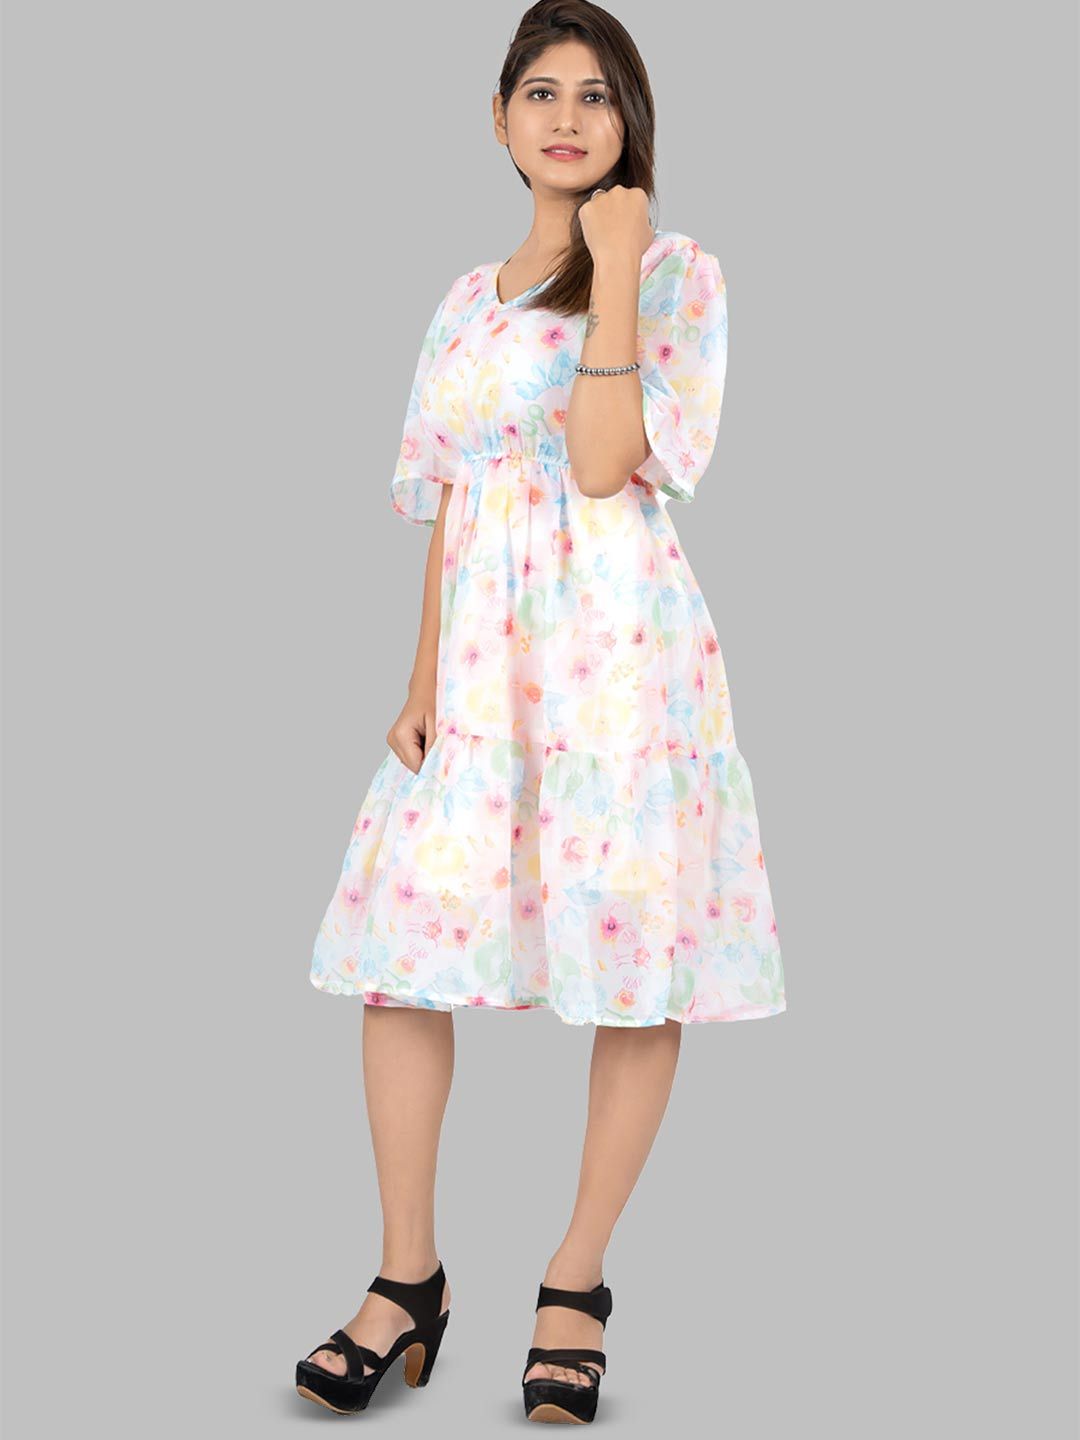 N N ENTERPRISE V-neck Floral Printed Short Flared Sleeves A-Line Dress Price in India